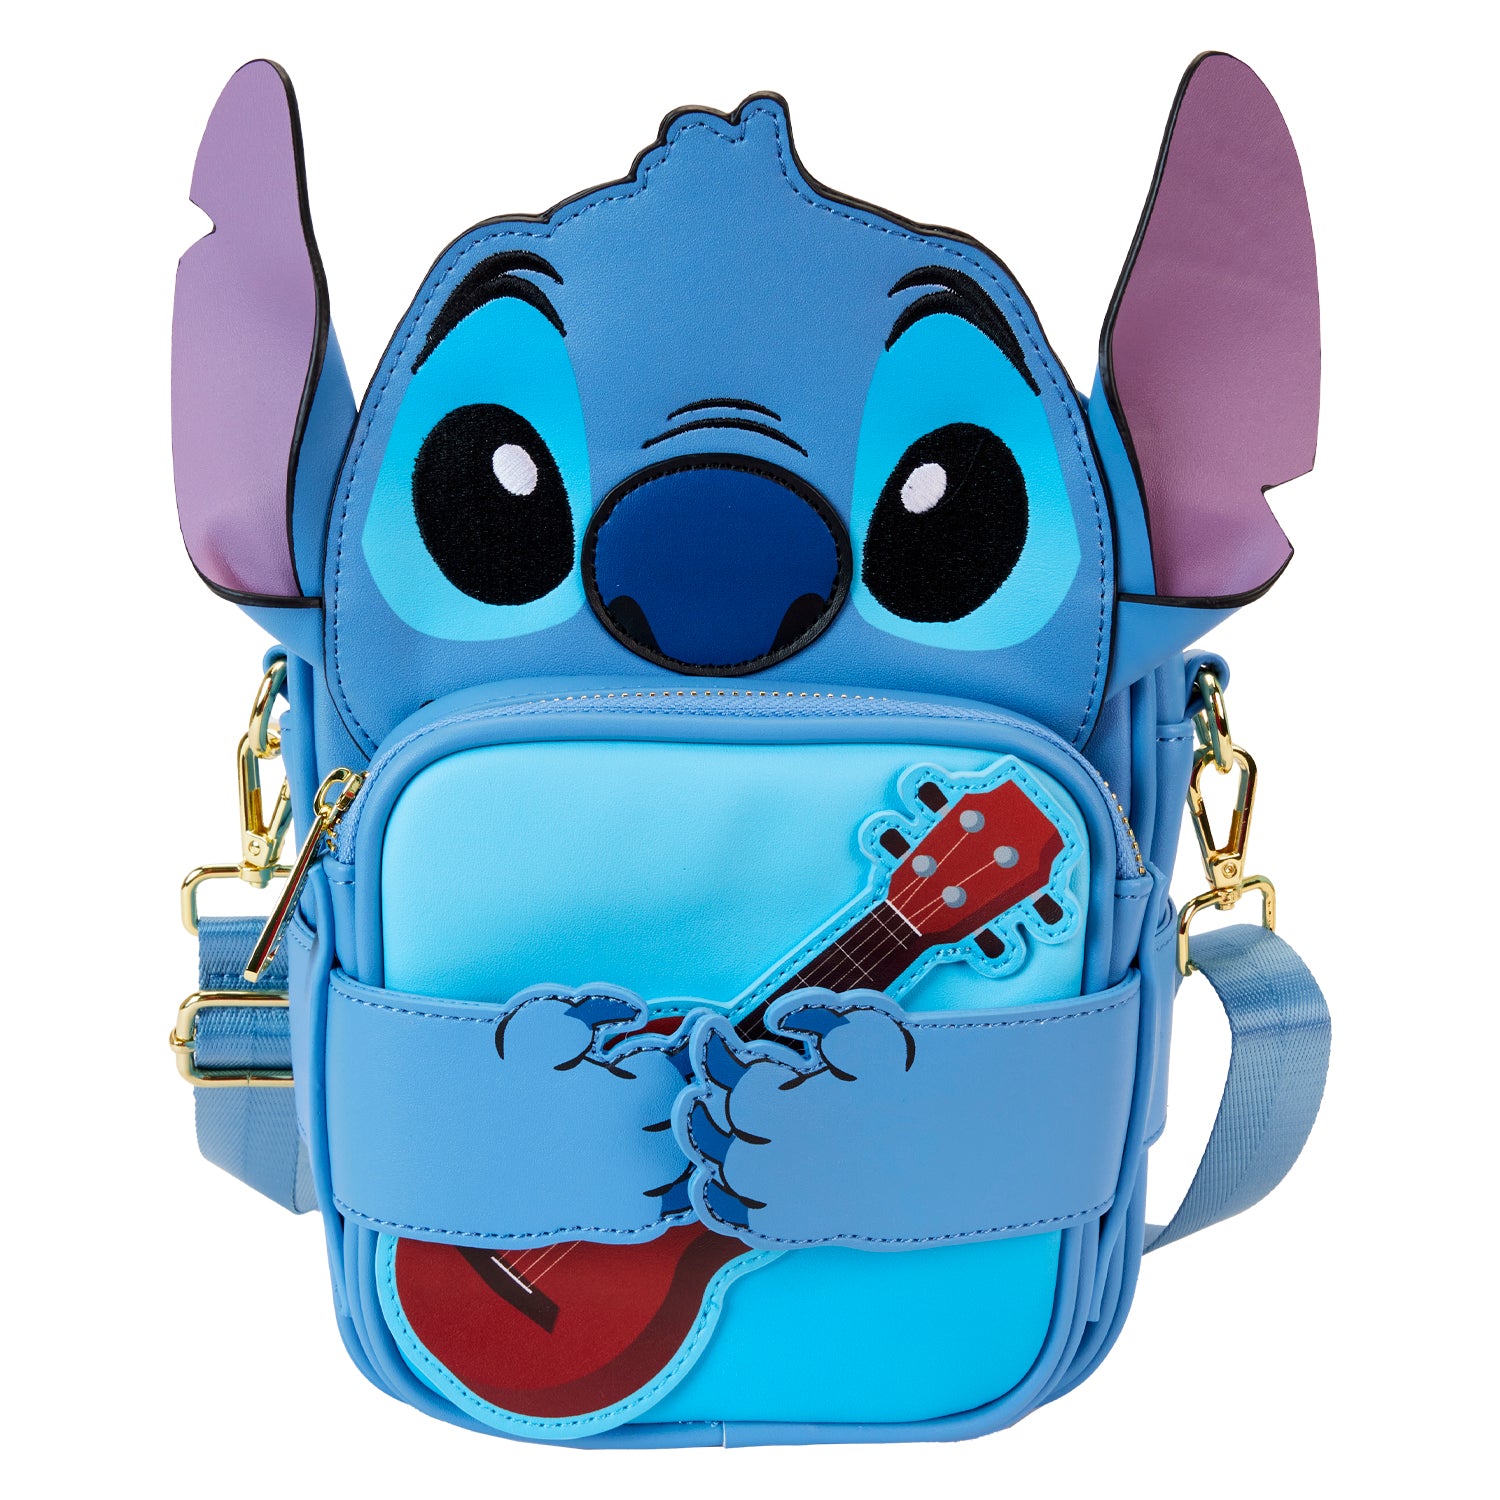 Loungefly Disney Lilo and Stitch Stitch Camping Crossbuddies Bag